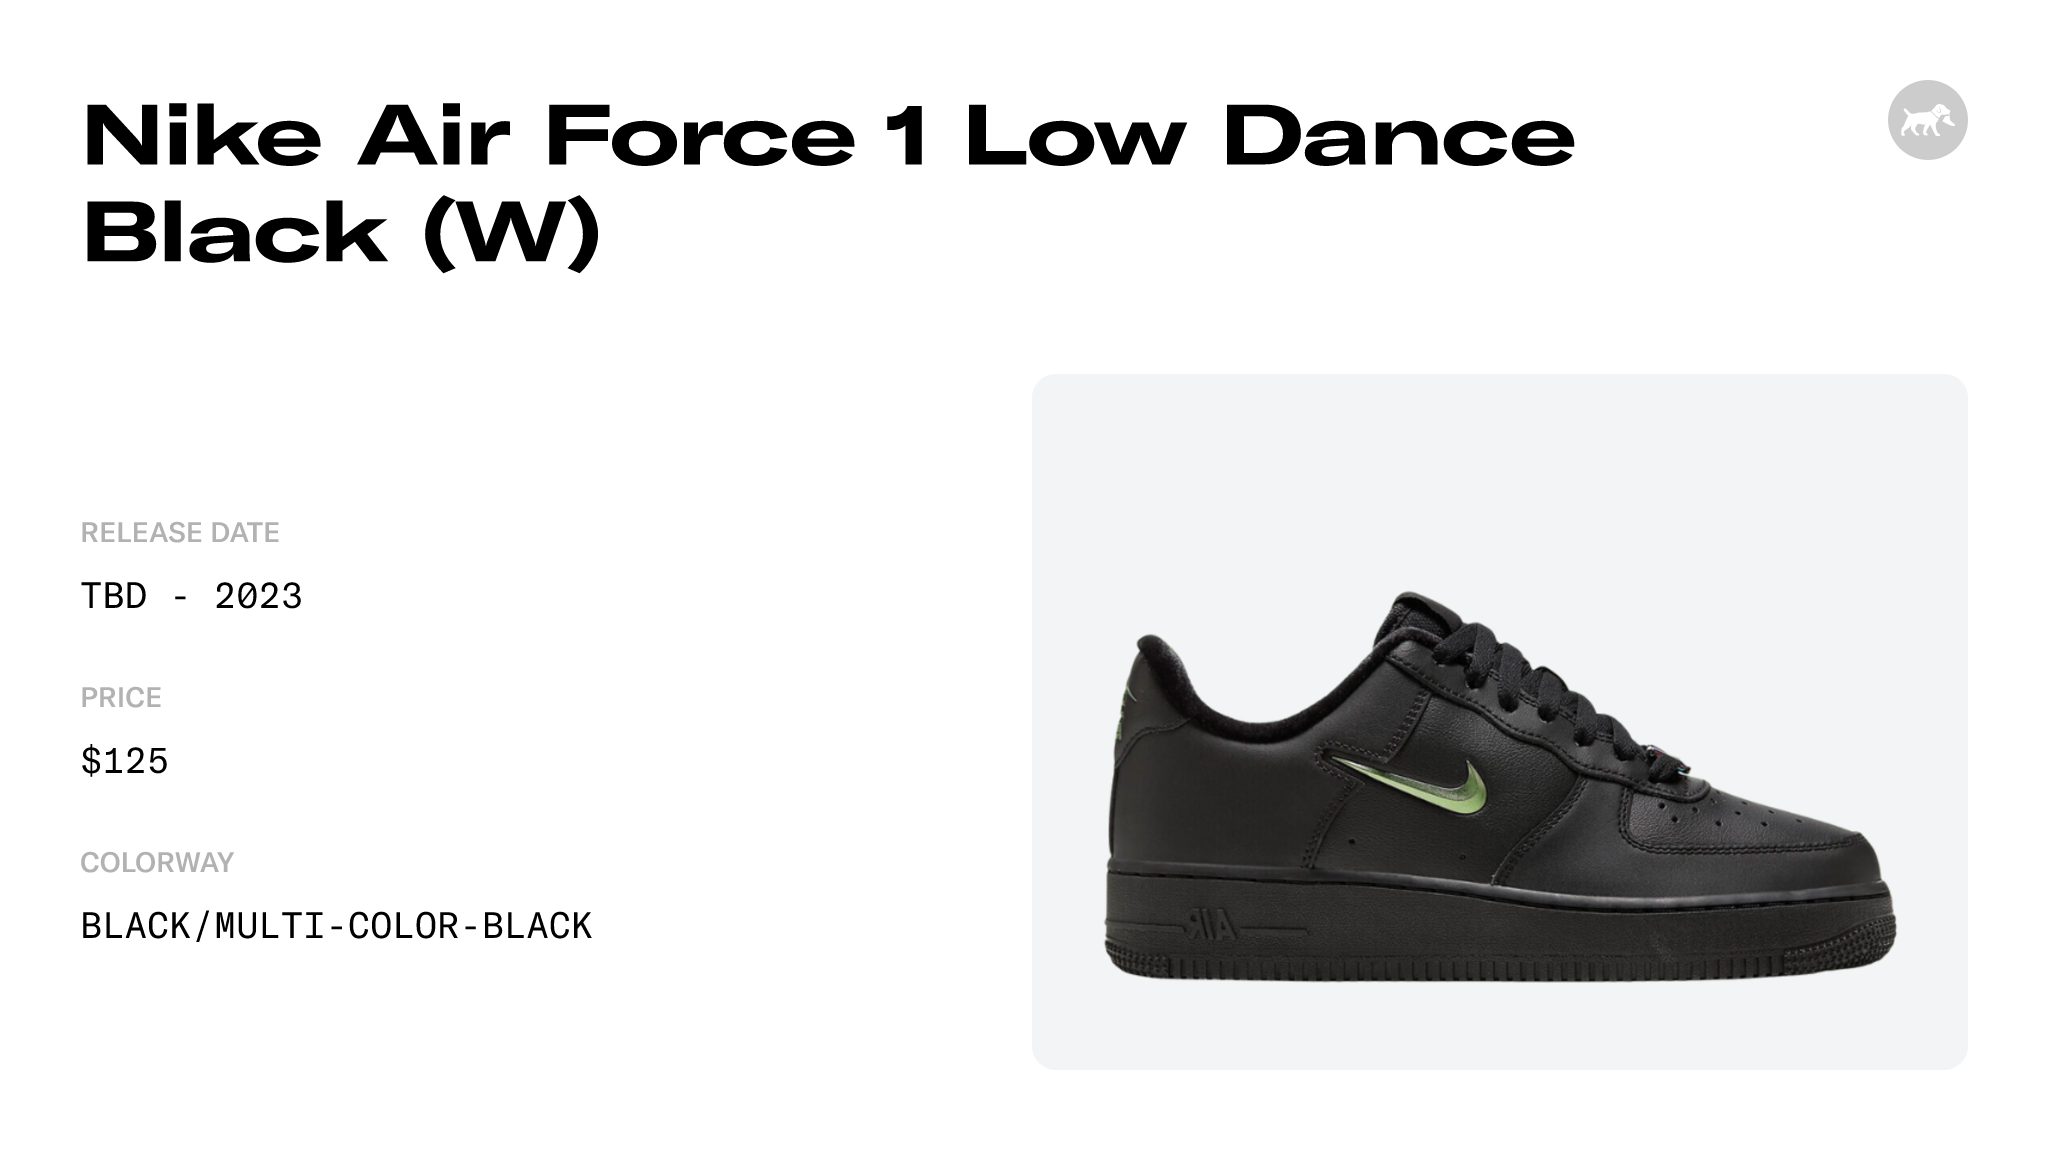 Lower Price Dance. Nike IN